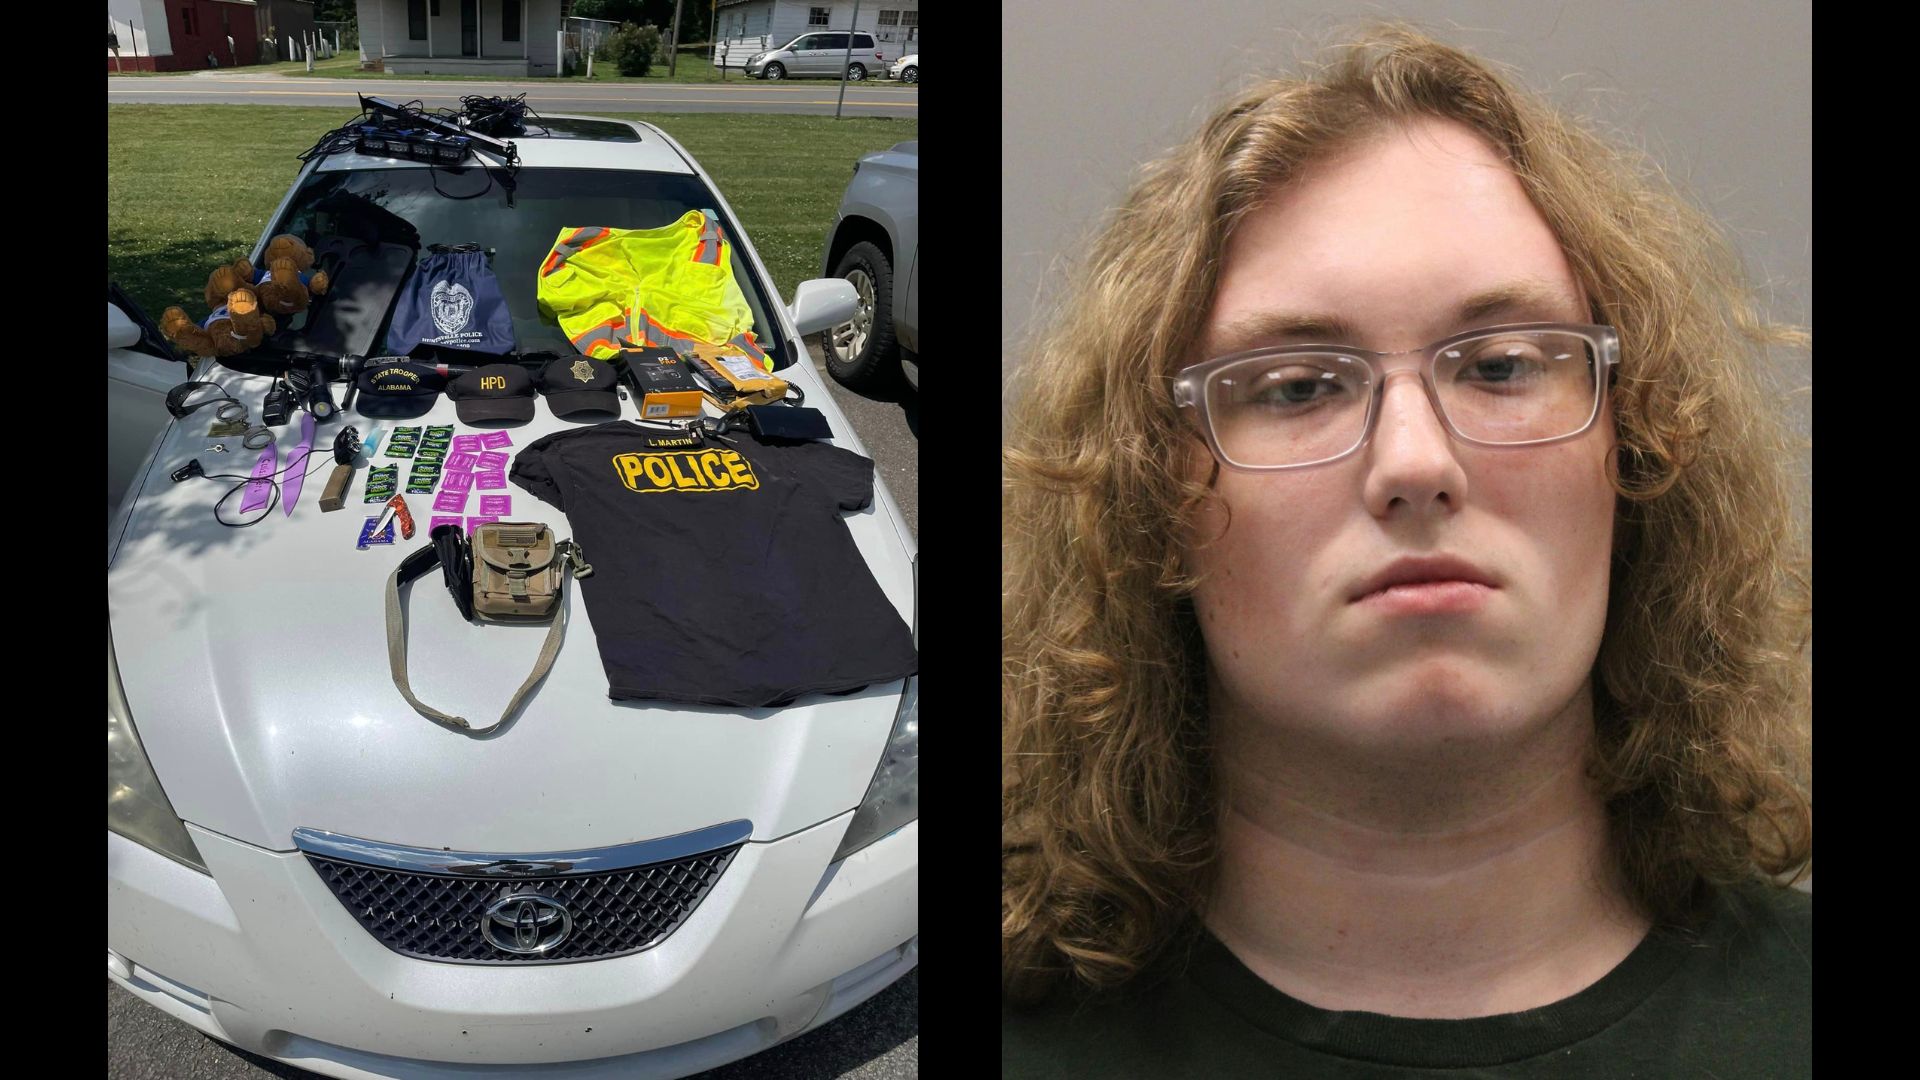 Alabama Teen Uses Toyota Solara To Impersonate Police